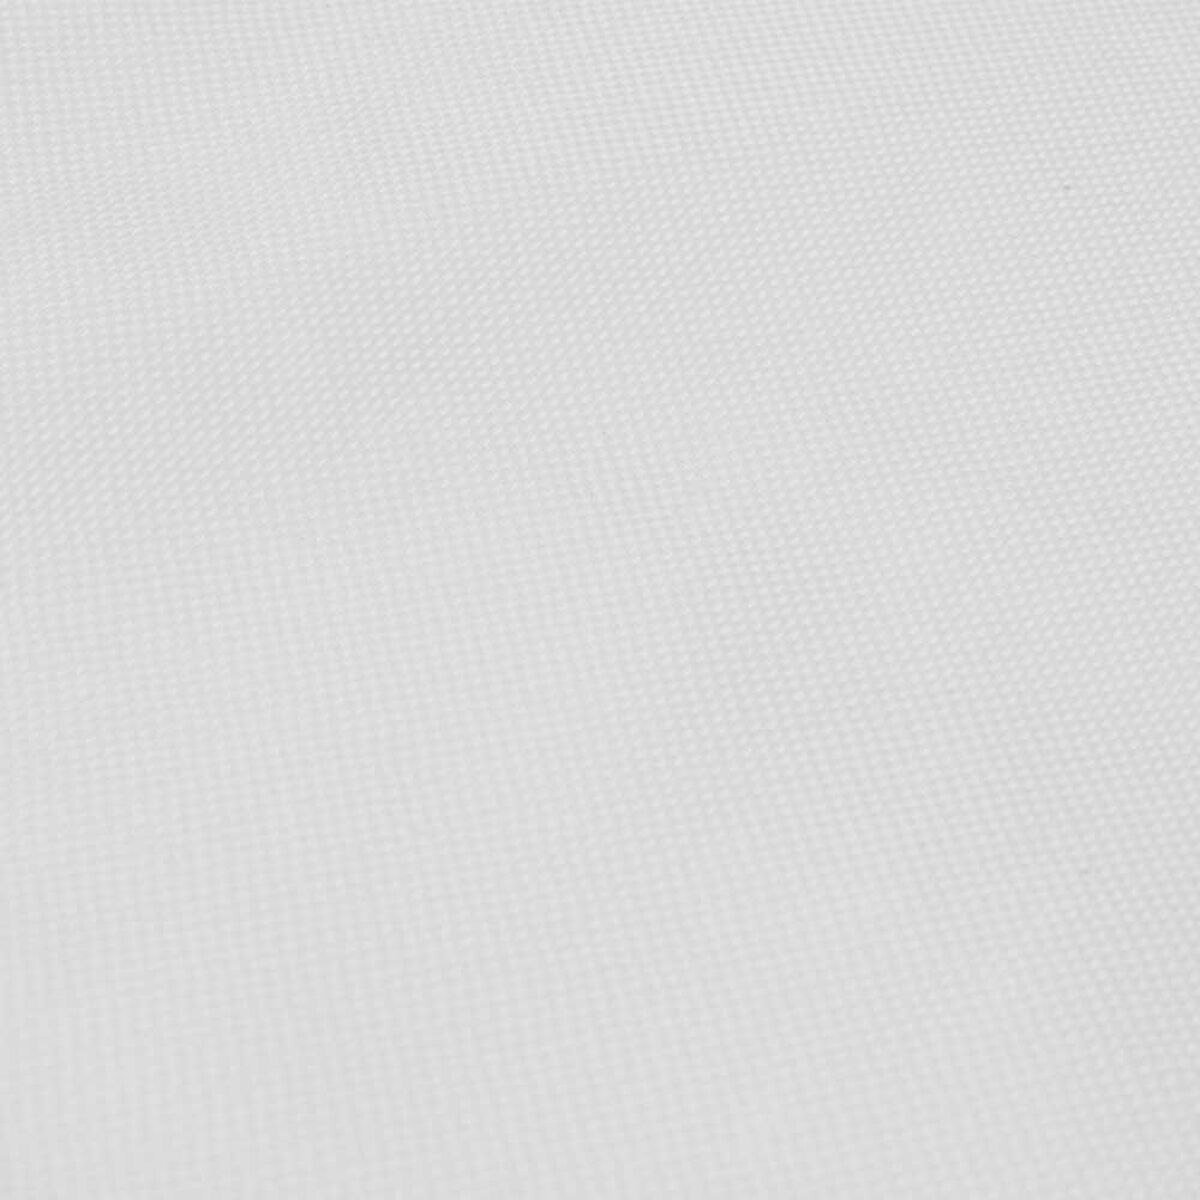 Roller Garden Garden Vincenzi R3096 Blanco 200 x 250 cm